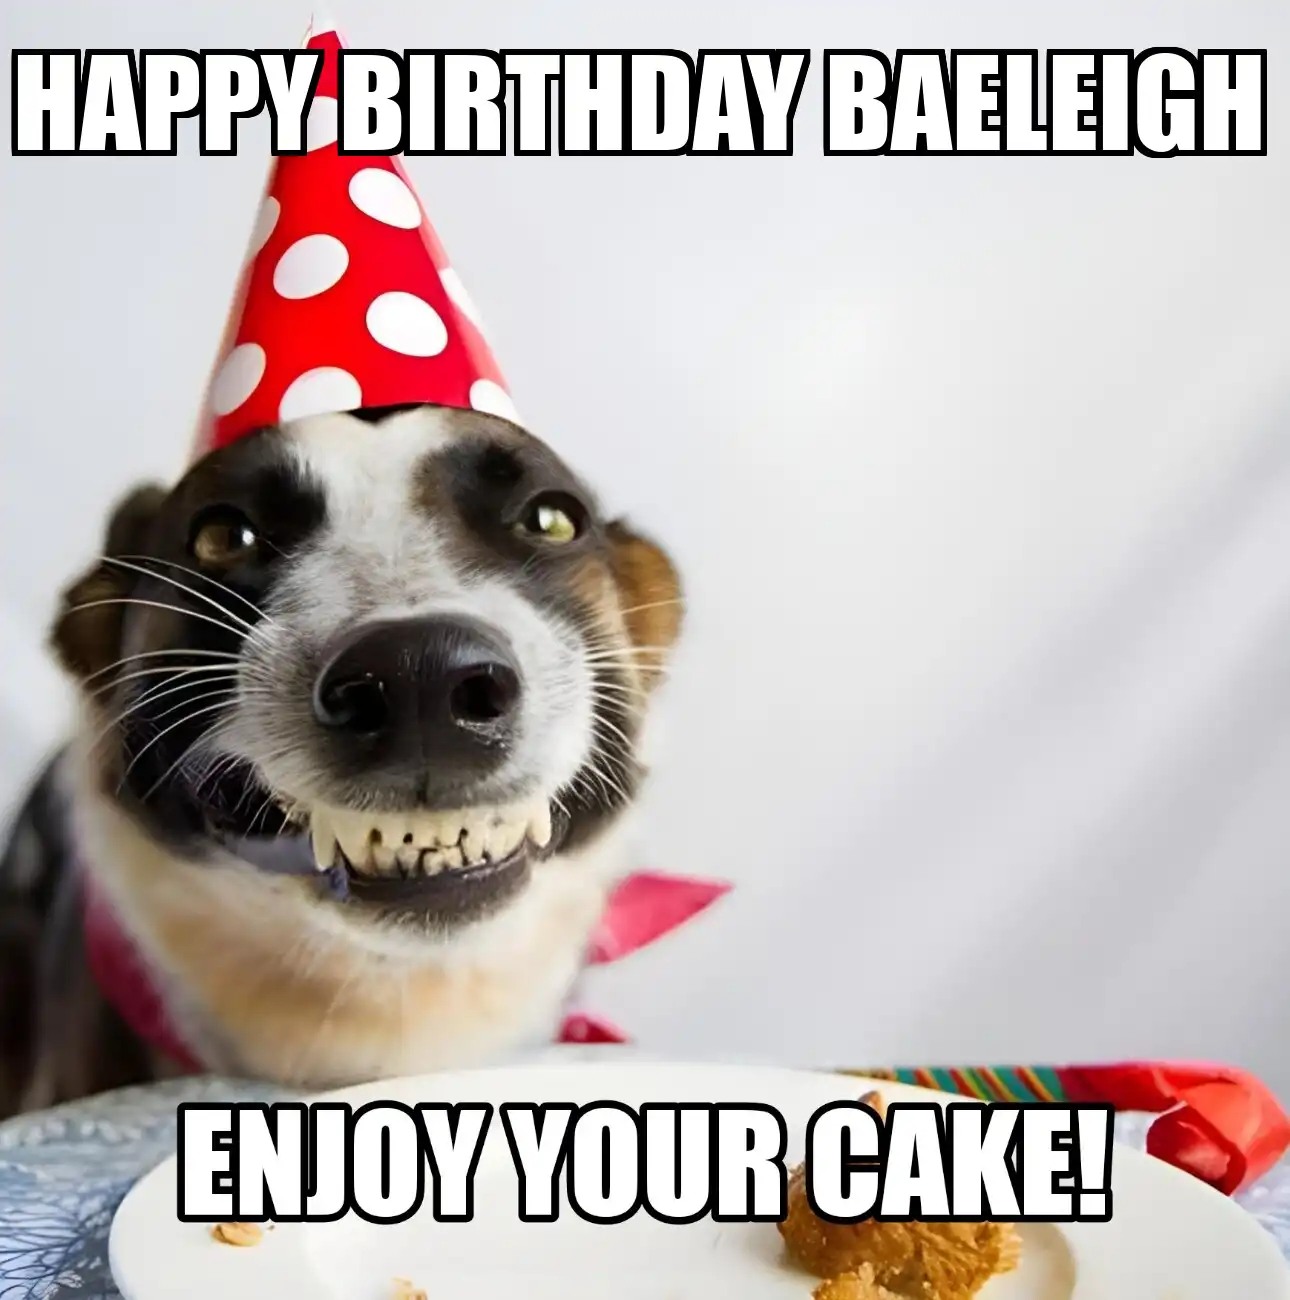 Happy Birthday Baeleigh Enjoy Your Cake Dog Meme